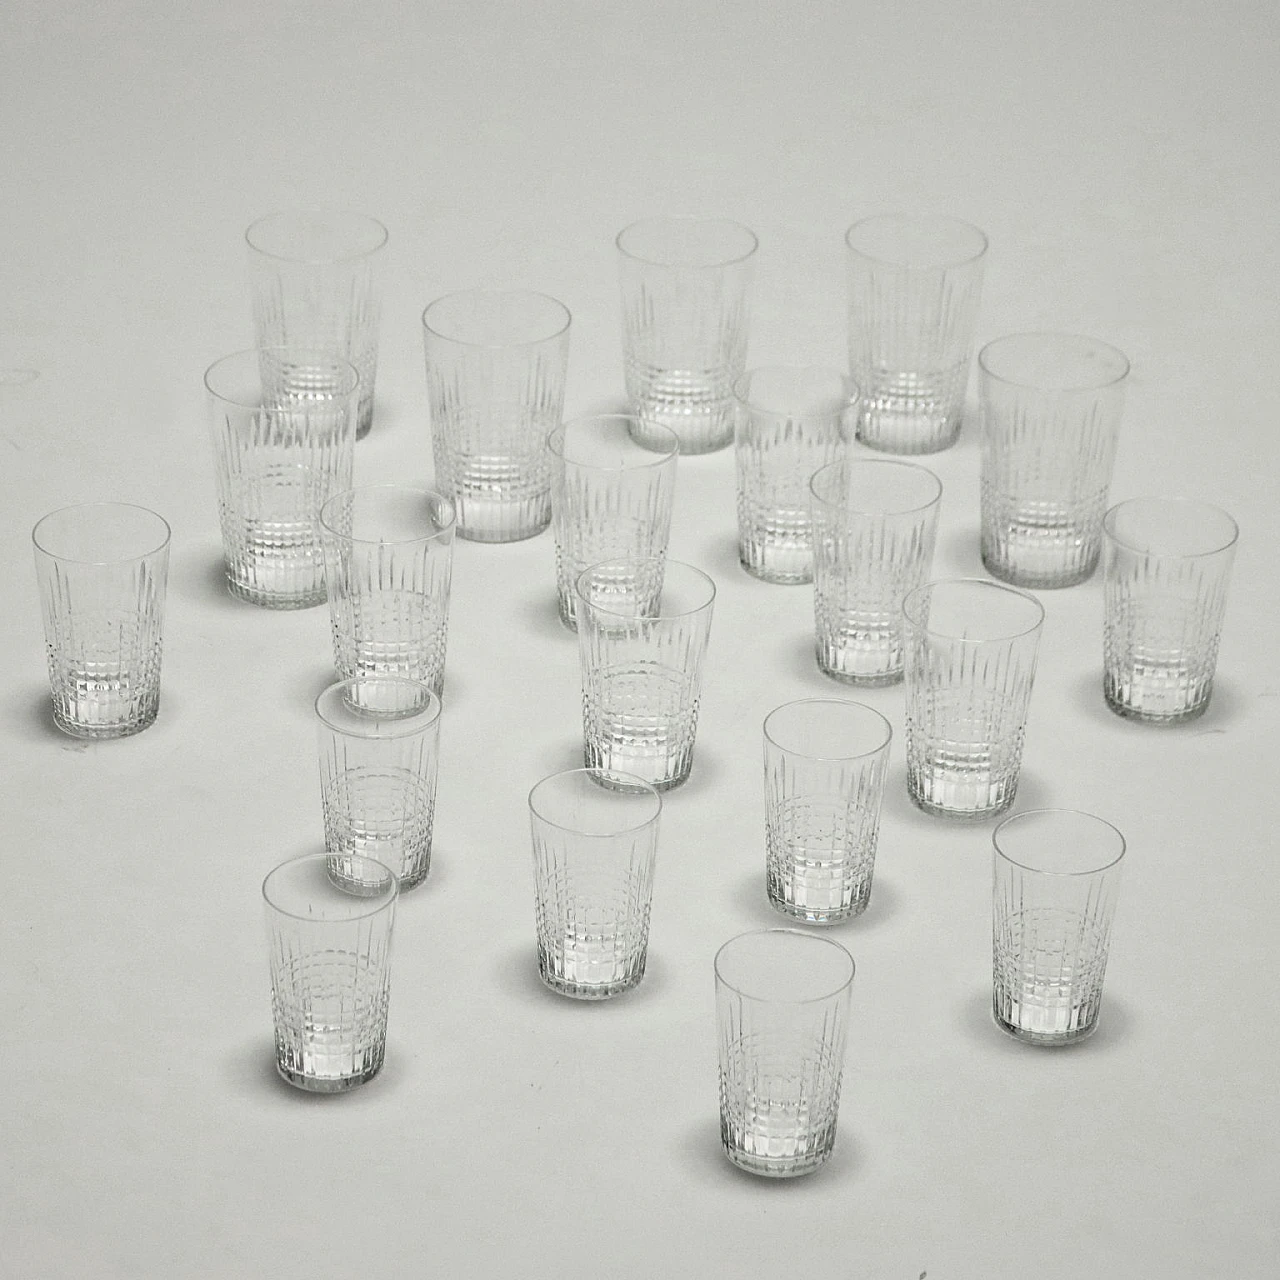 20 Nancy crystal glasses by Baccarat 1